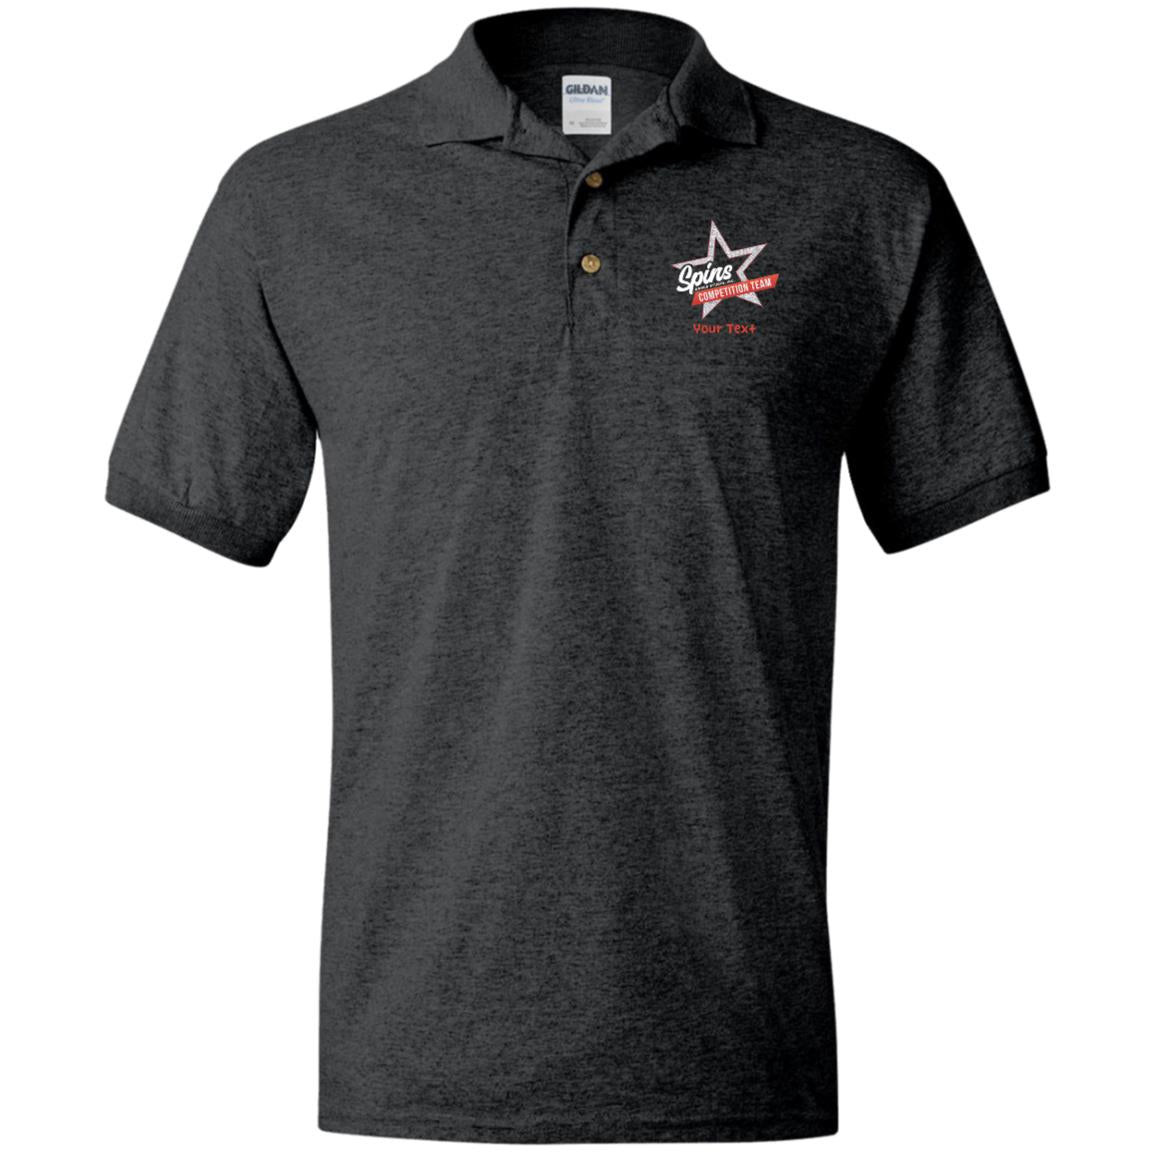 Jersey Polo Shirt - Custom label option